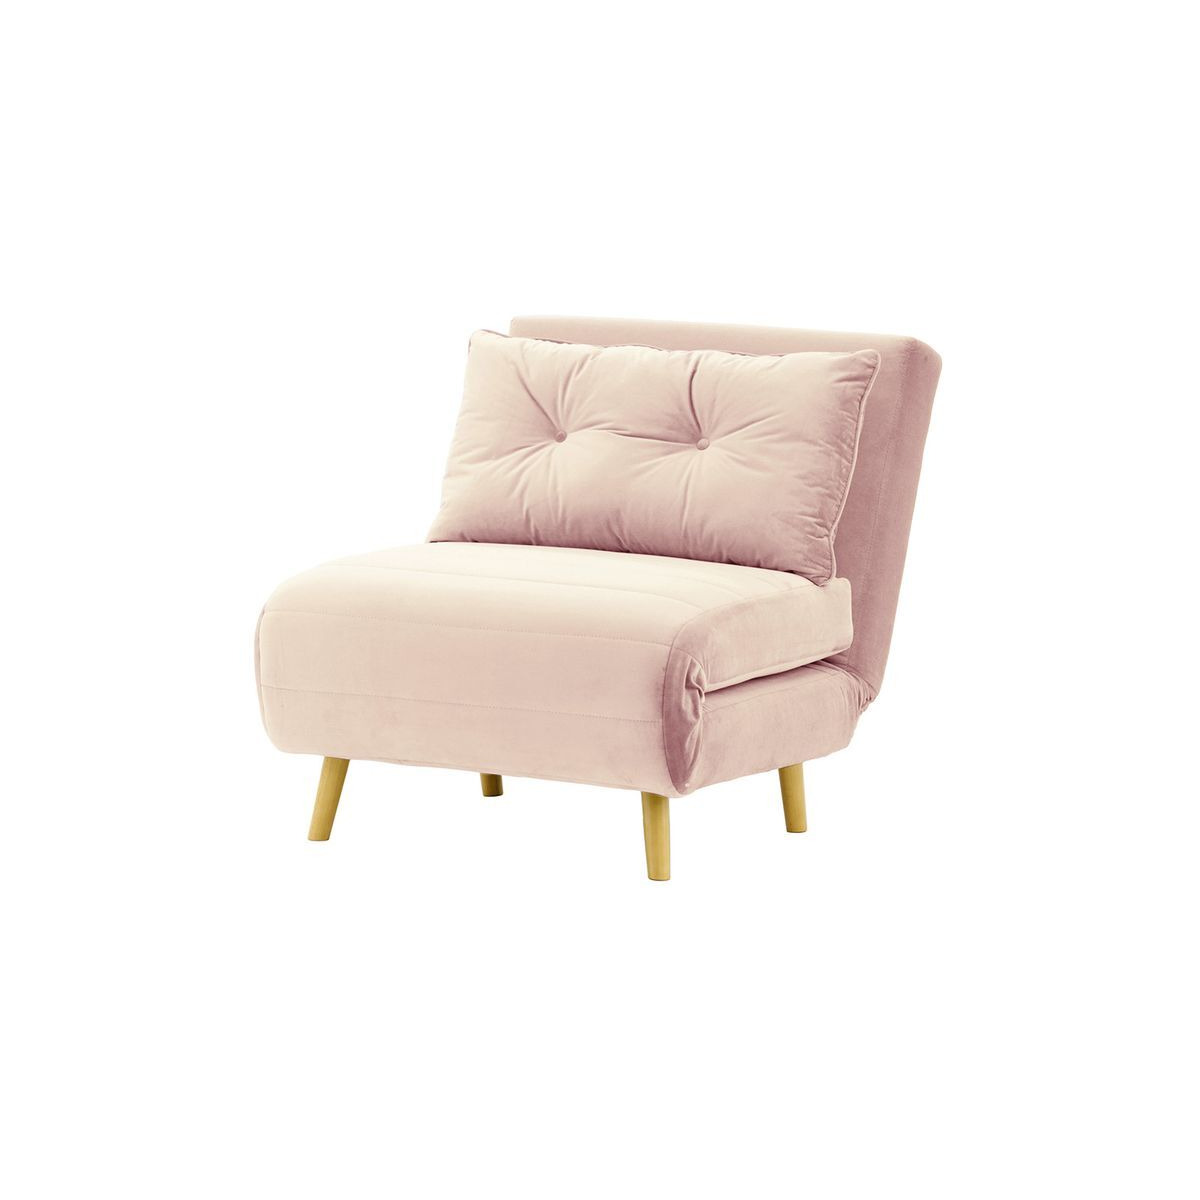 Flic Single Sofa Bed Chair - width 77 cm, lilac, Leg colour: like oak - image 1